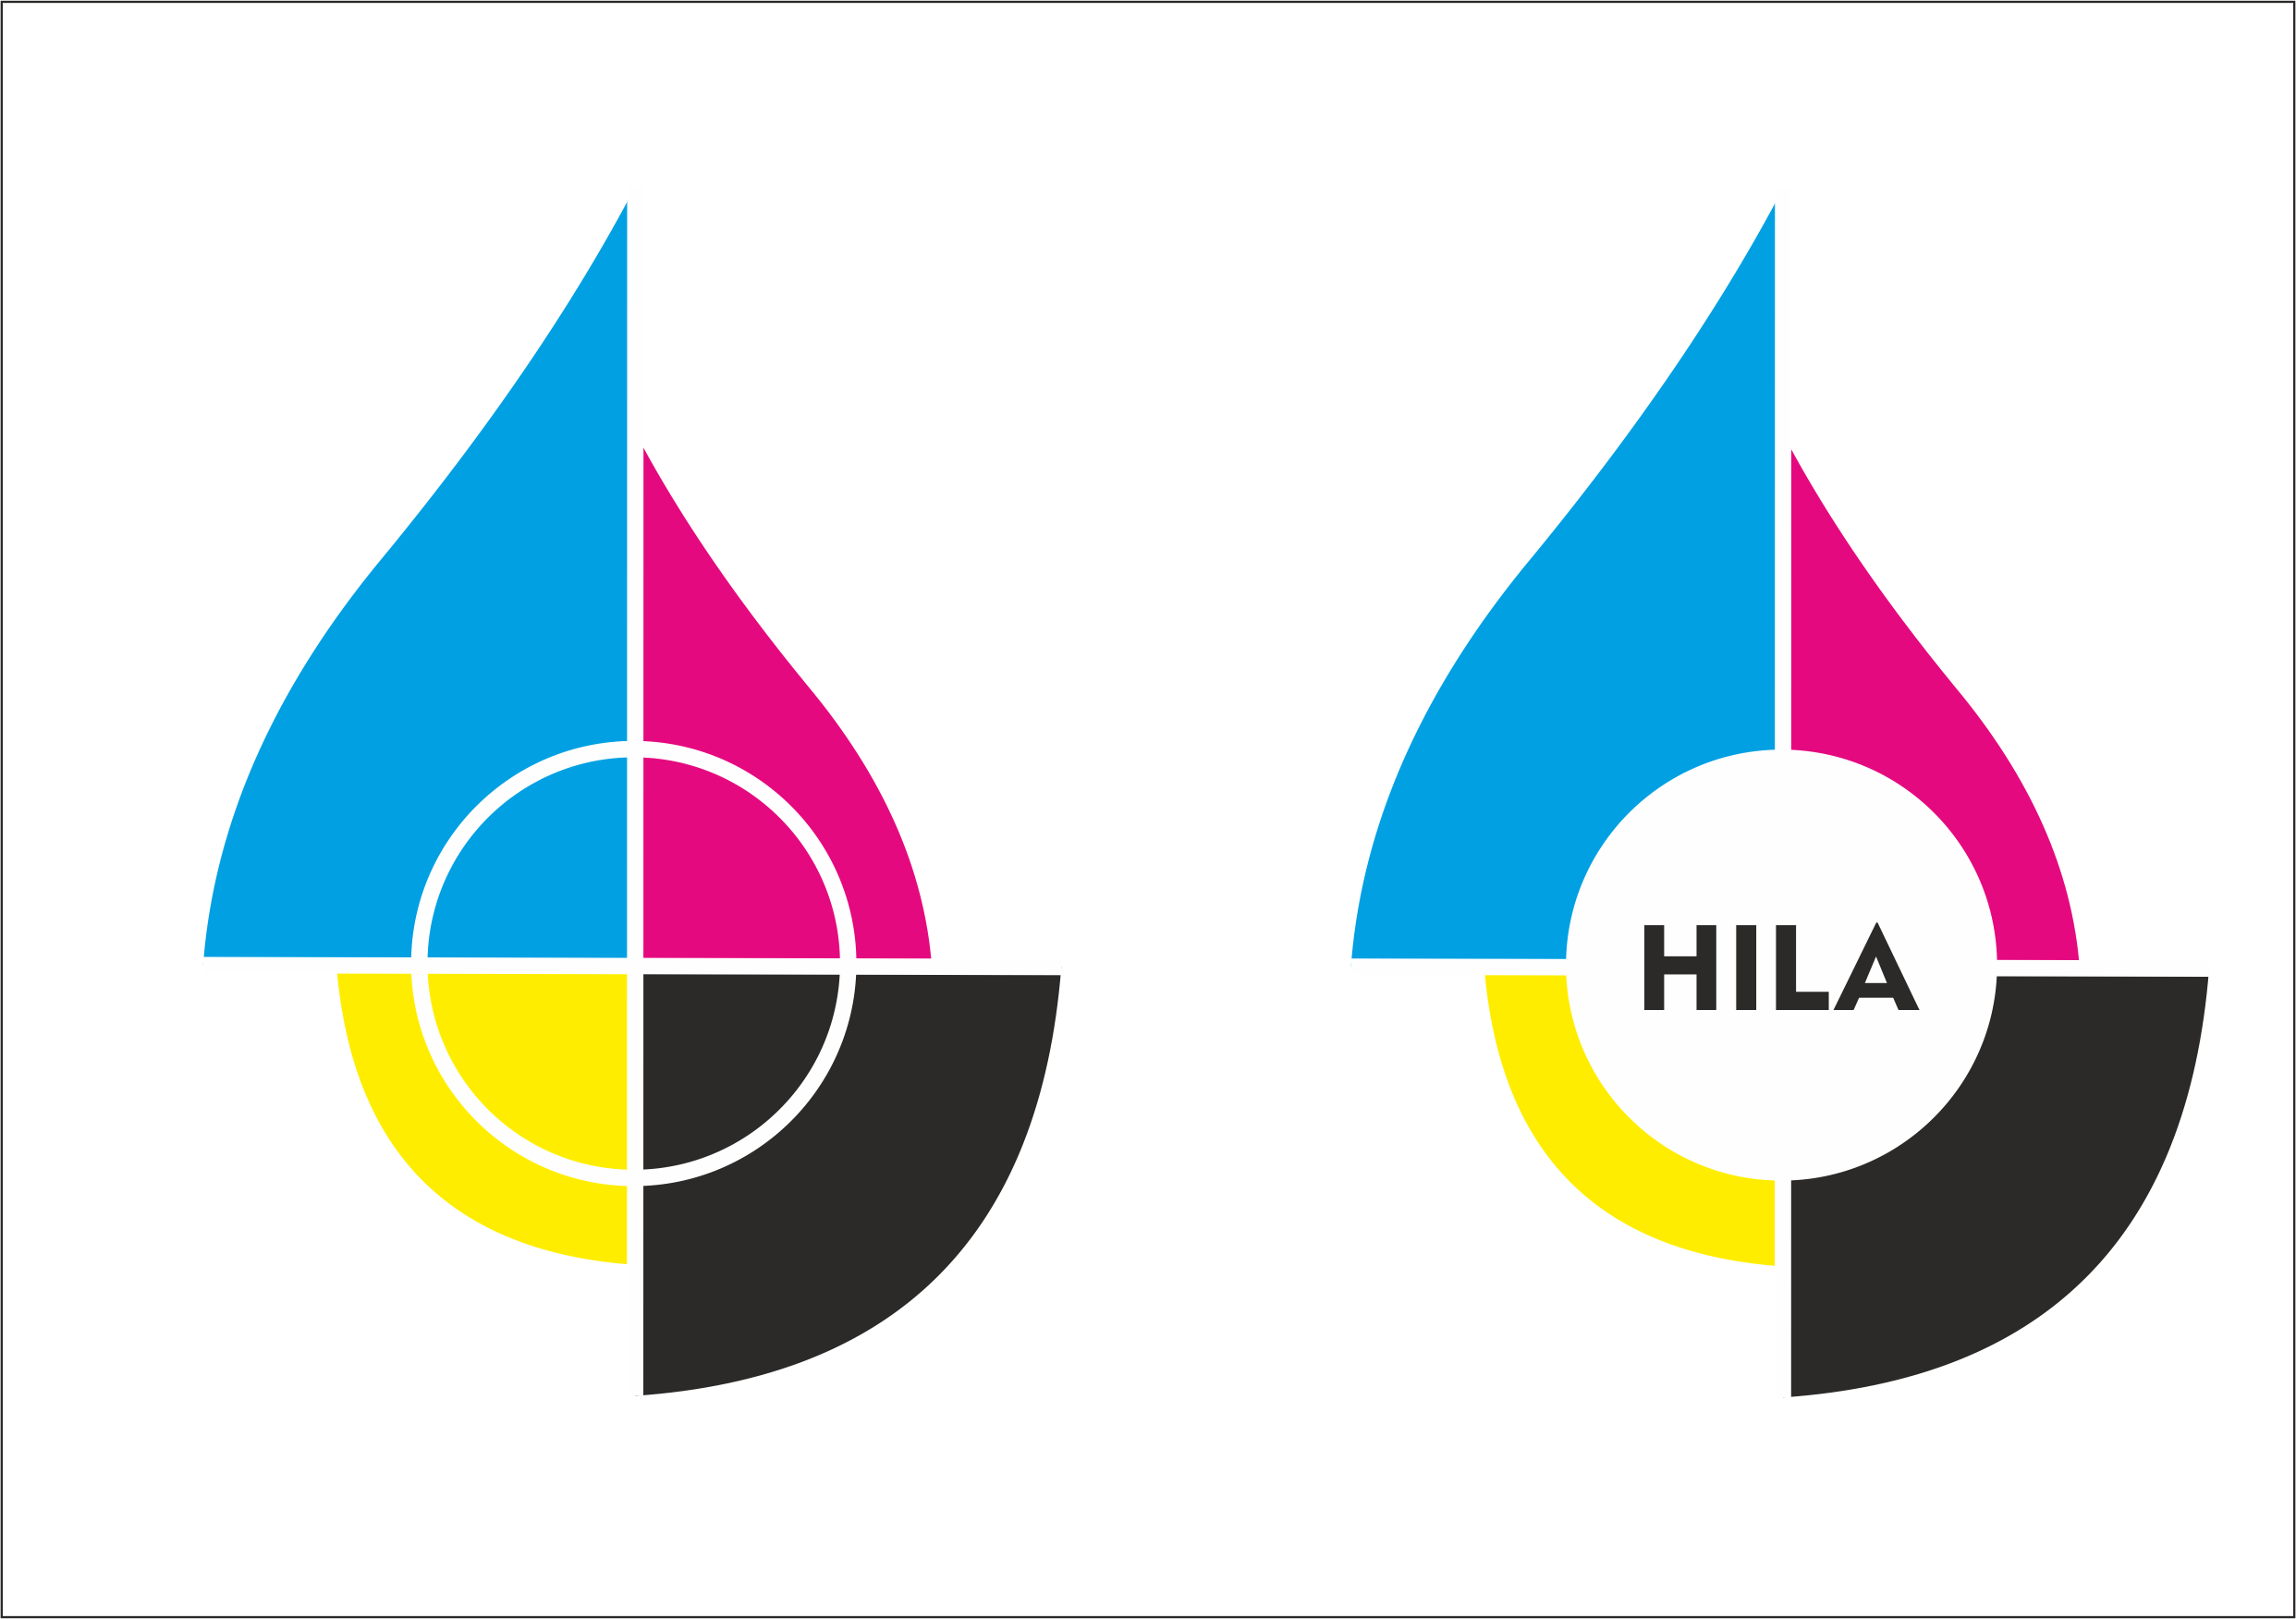 Digital Printing Logo - Need some feedback for this company logodigital printing and offset